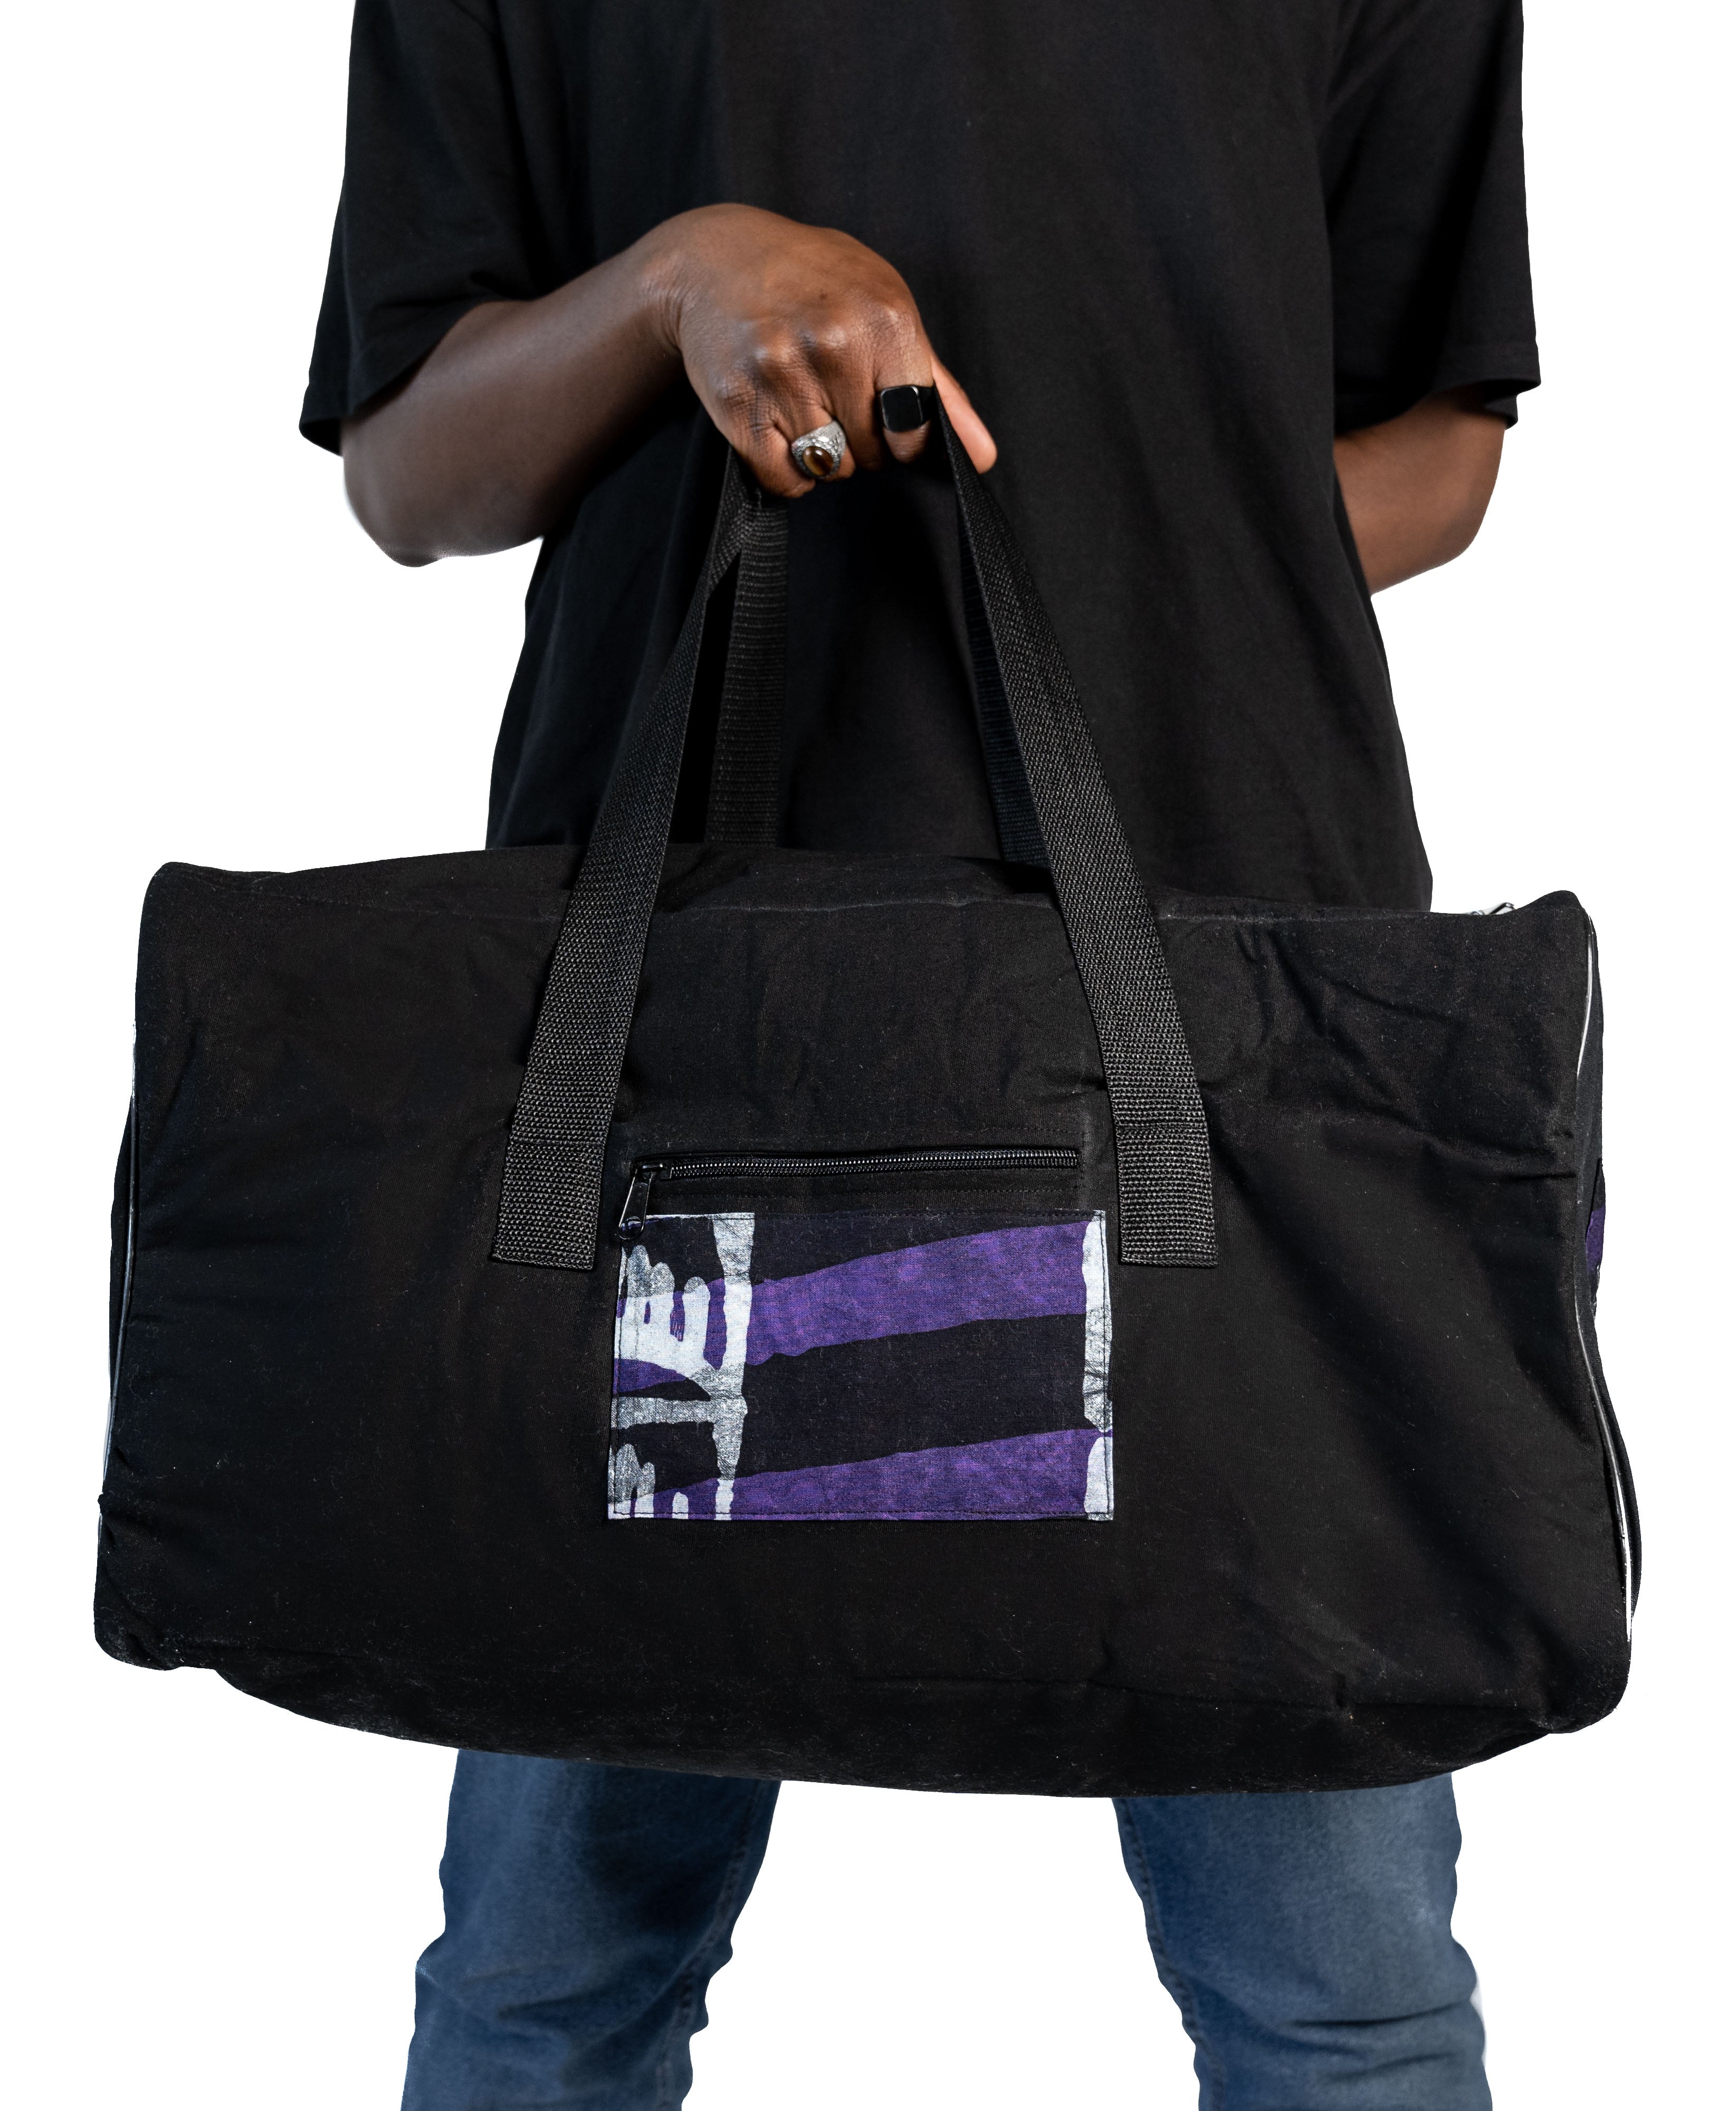 Sports bag black & purple